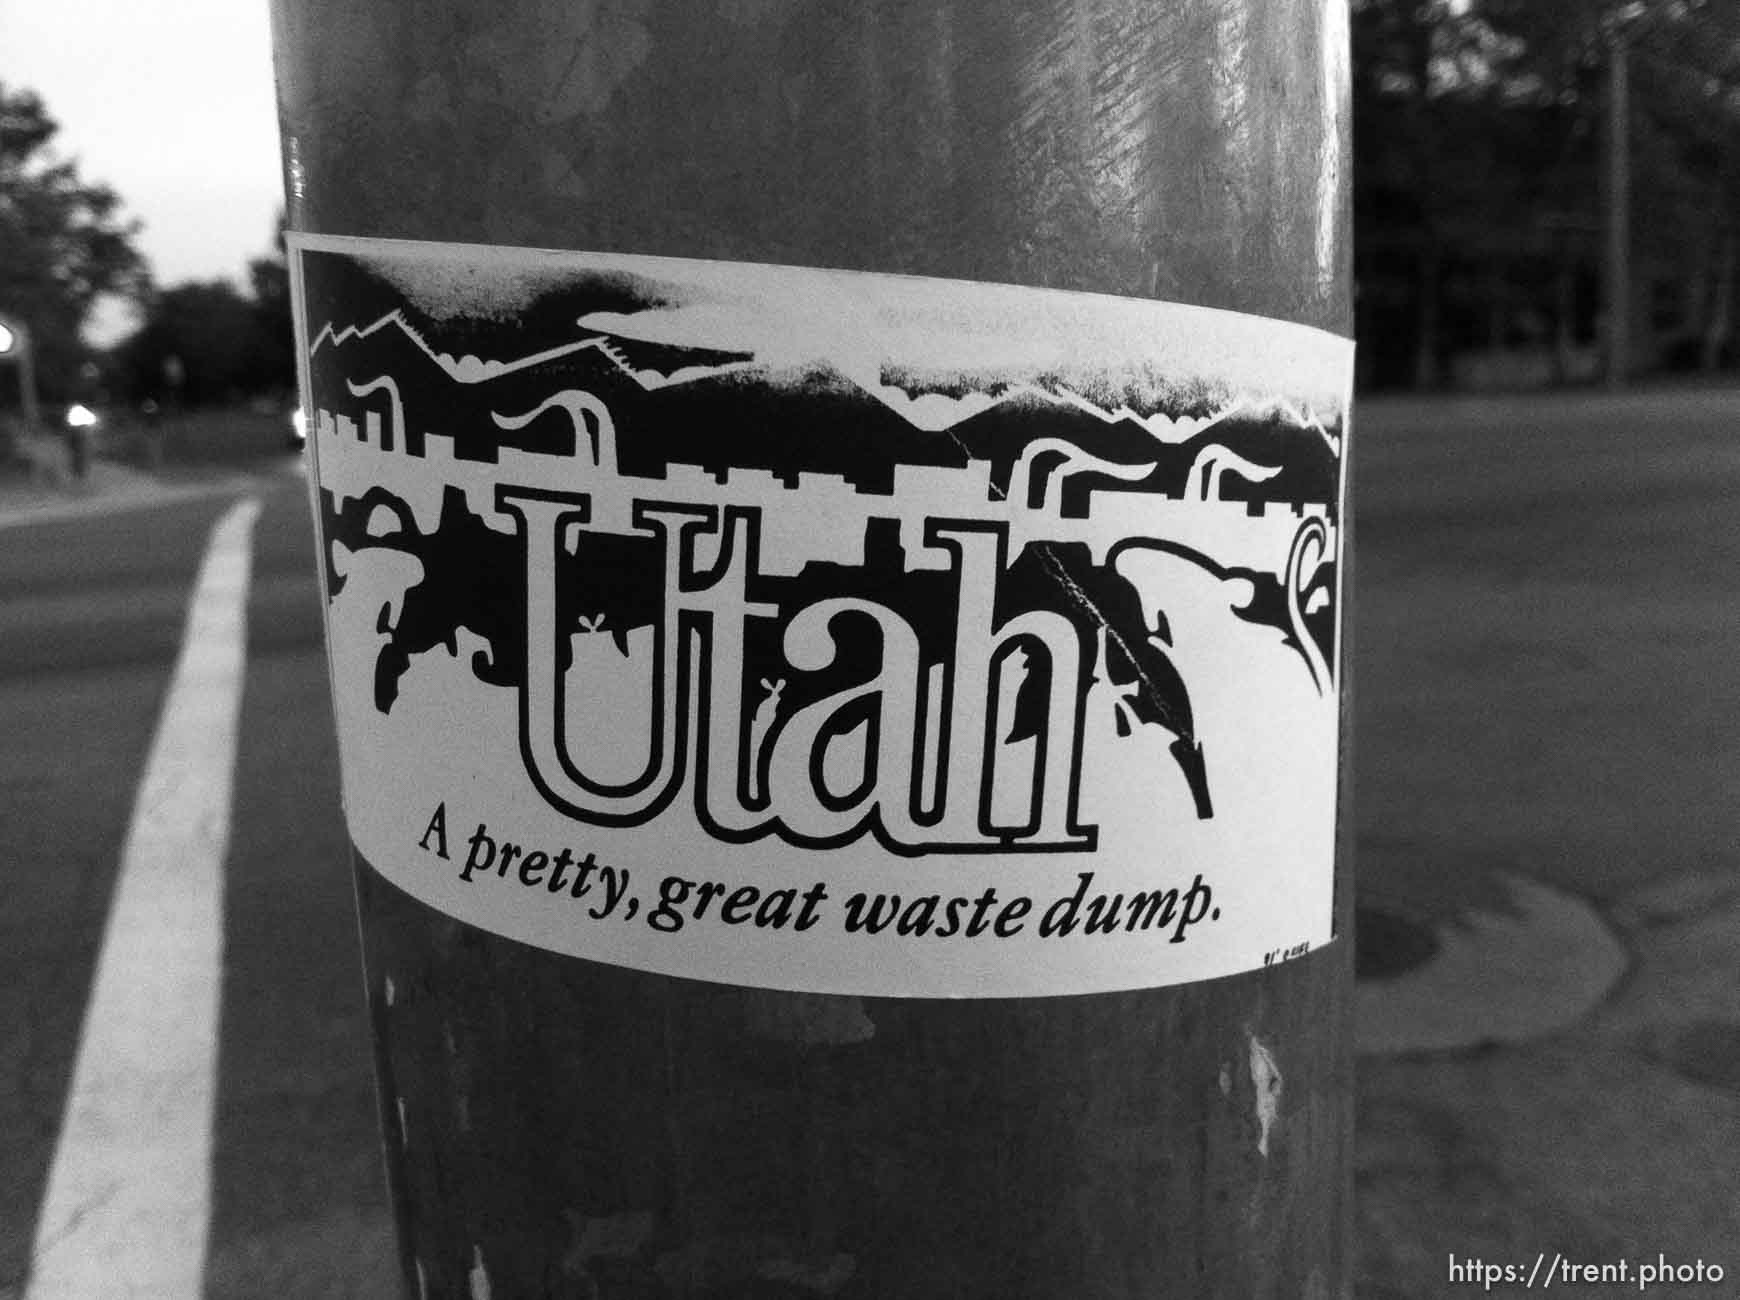 Utah a pretty great waste dump